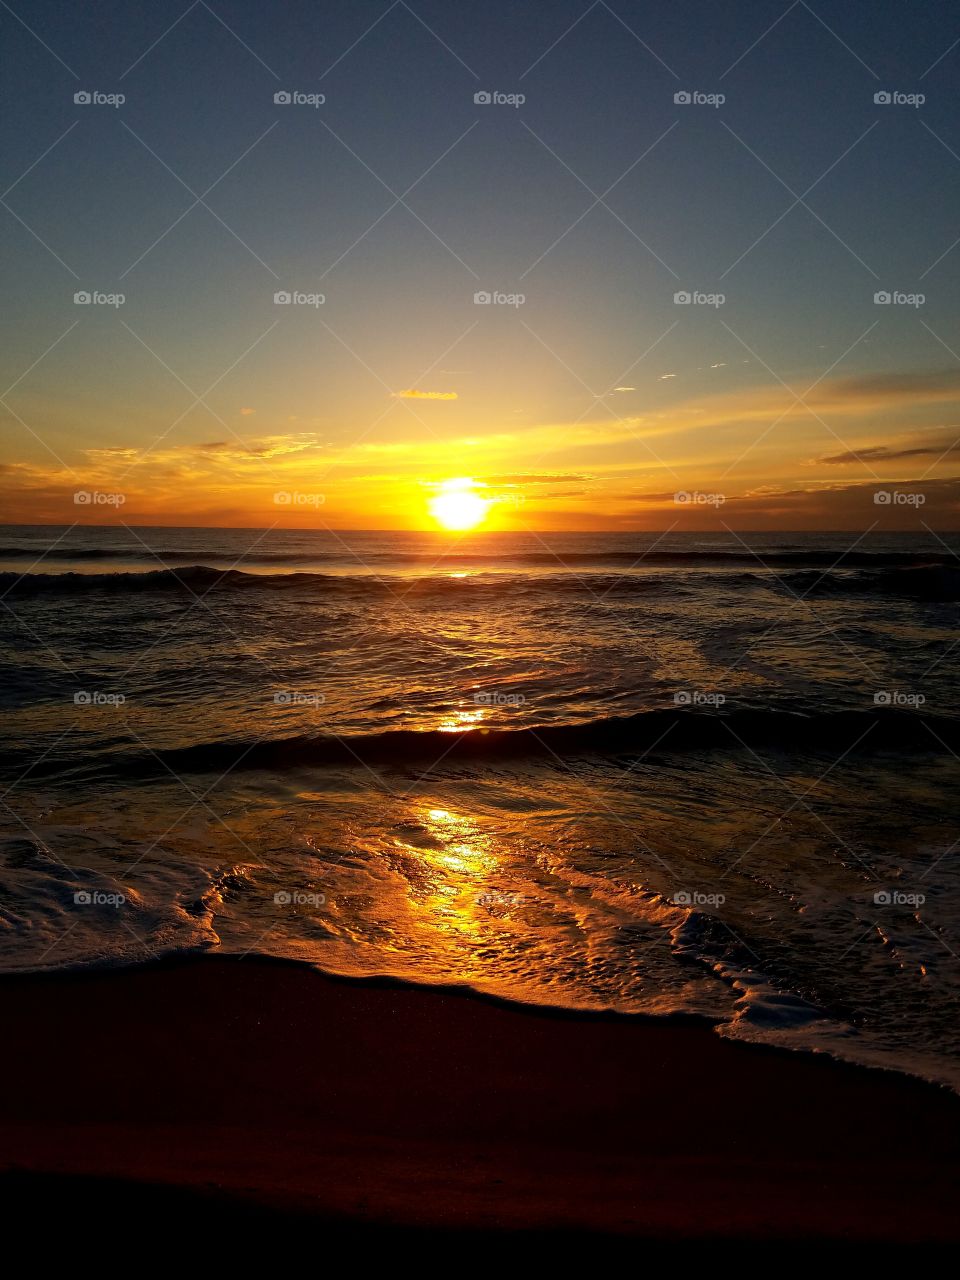 Coast of Massachusetts - Sunrise by the Sea